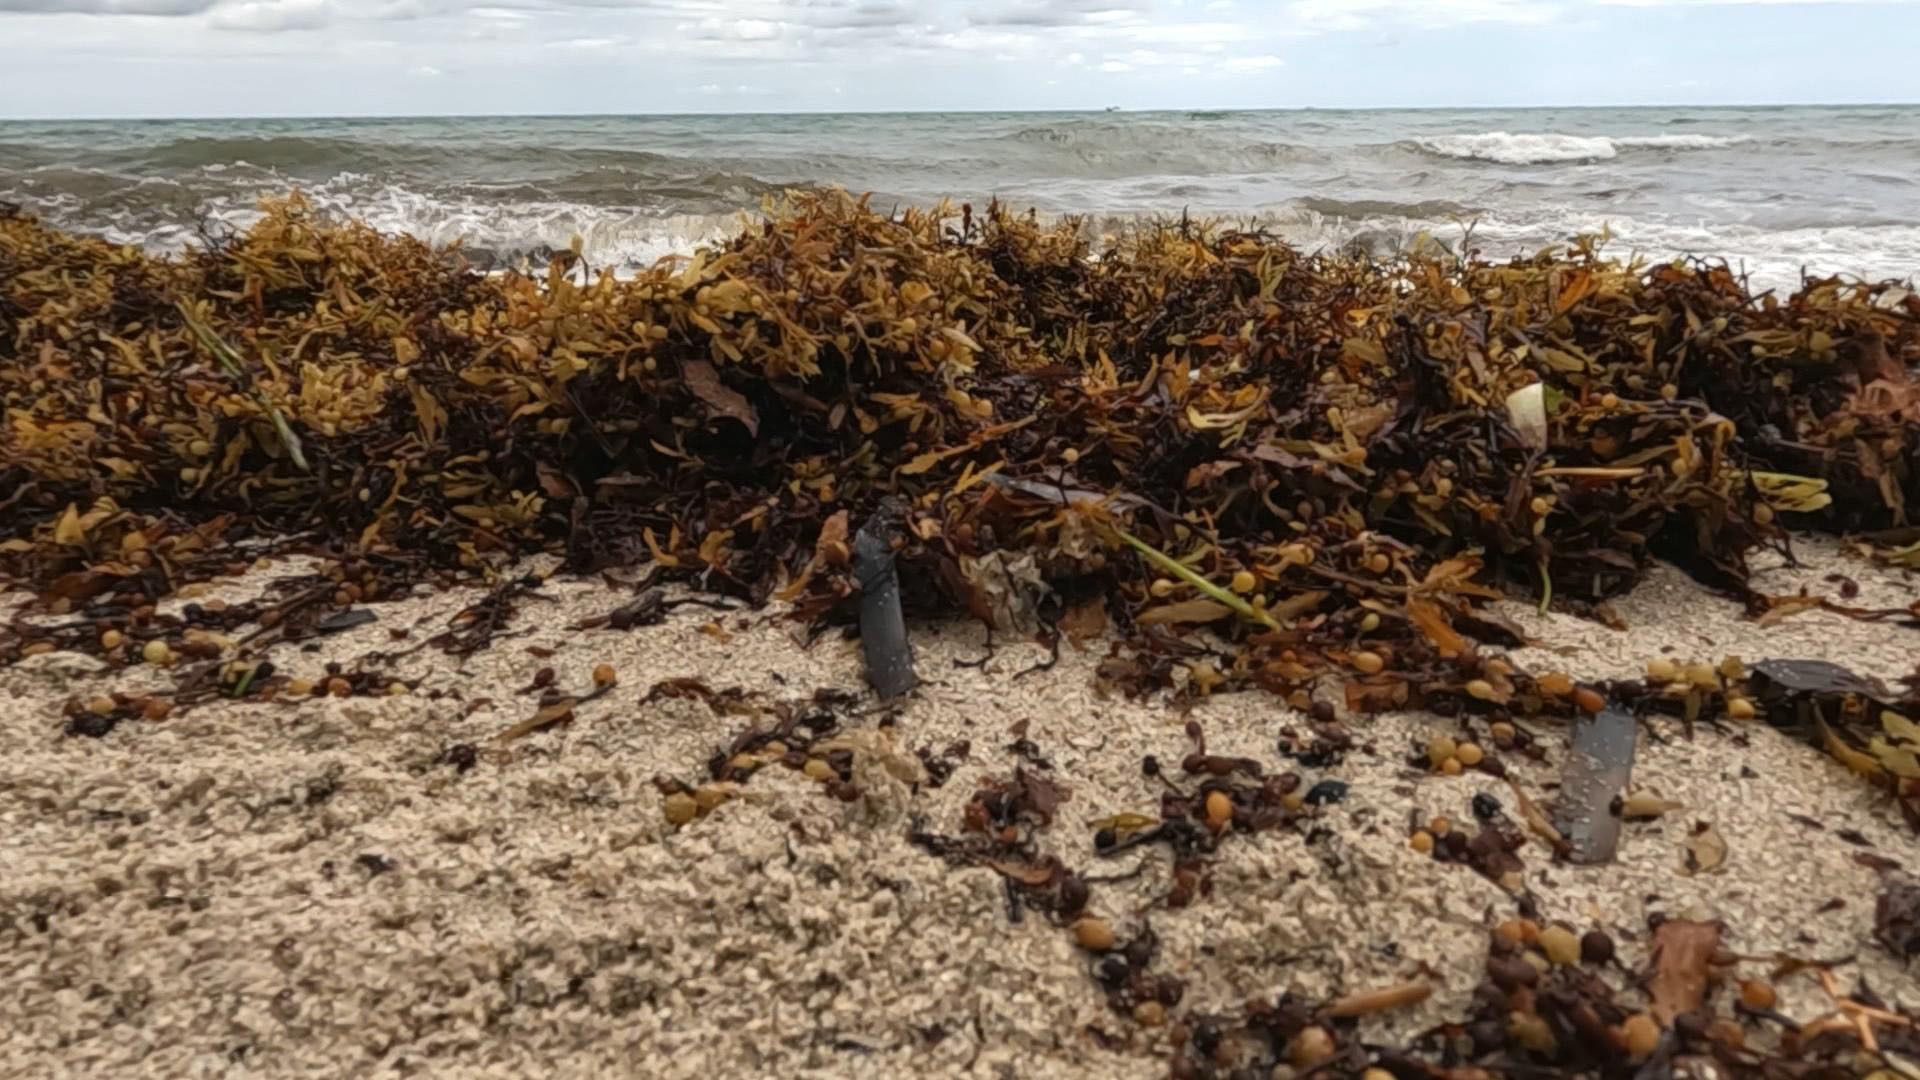 Watch CBS Mornings Giant seaweed bloom hits Florida coast Full show